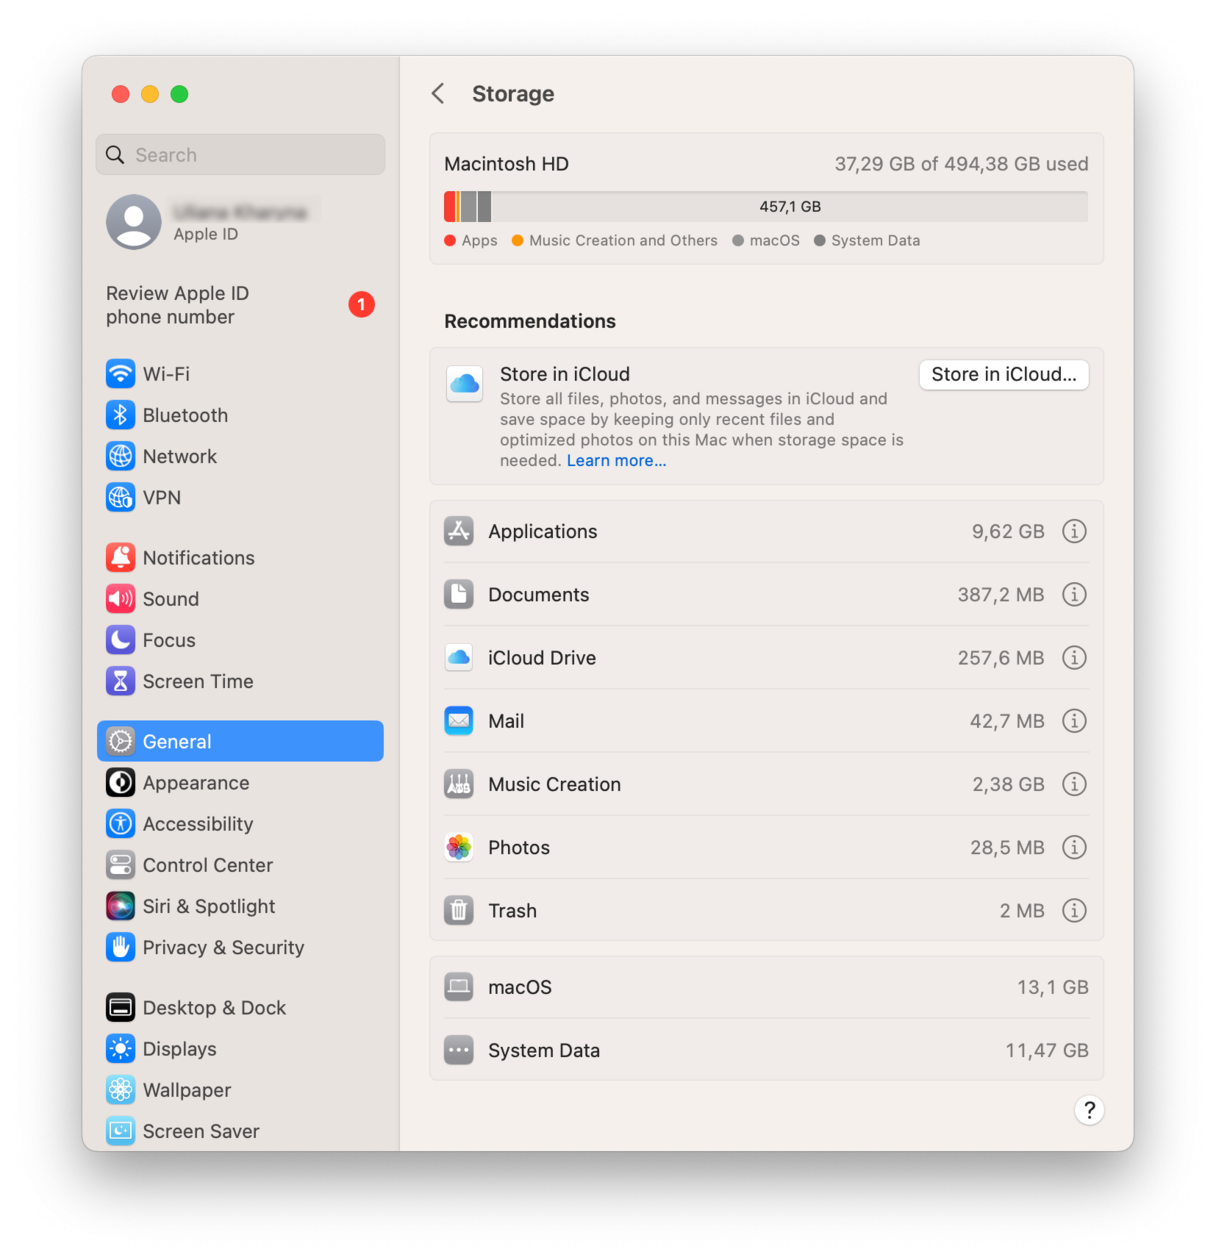 System Storage on Mac